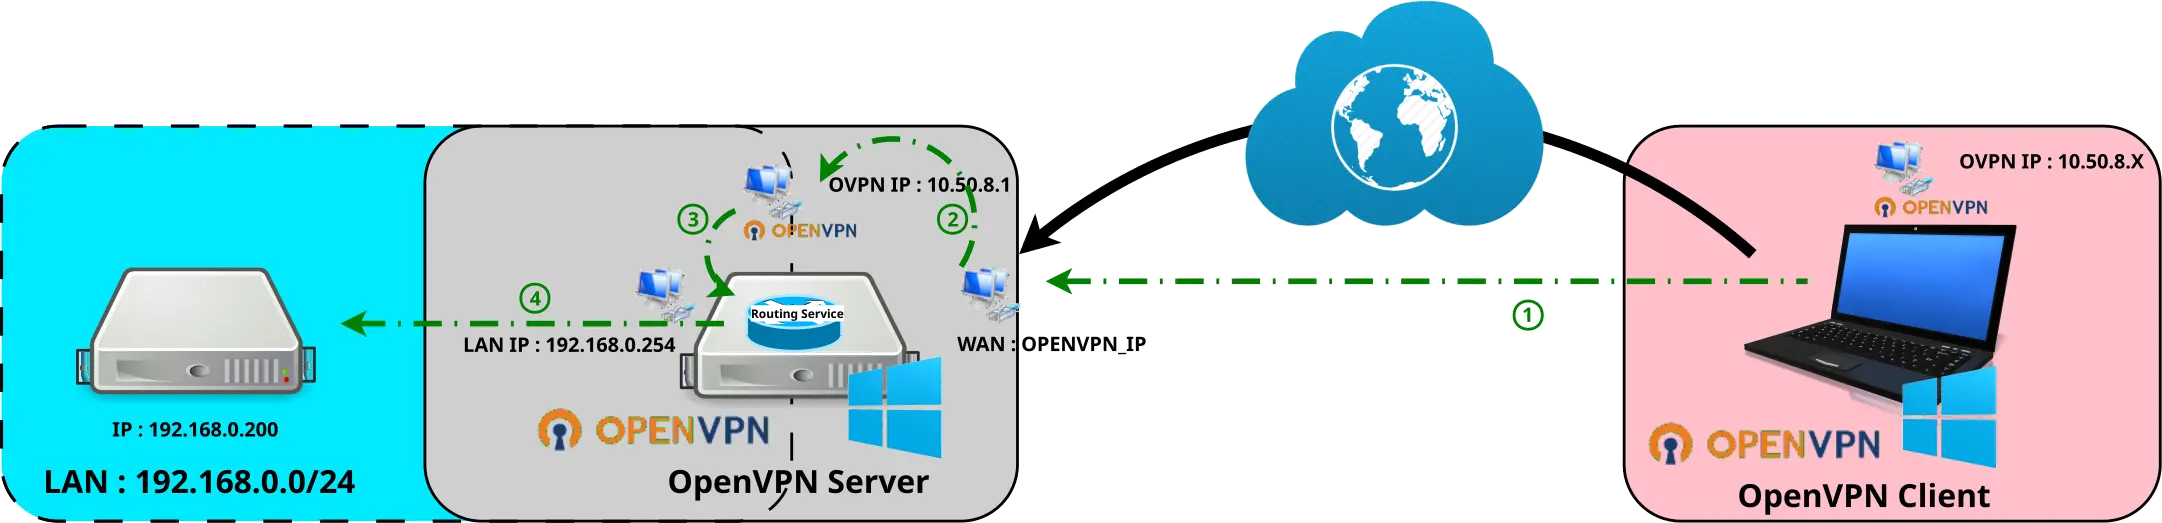 Windows OpenVPN with routing Network Scheme